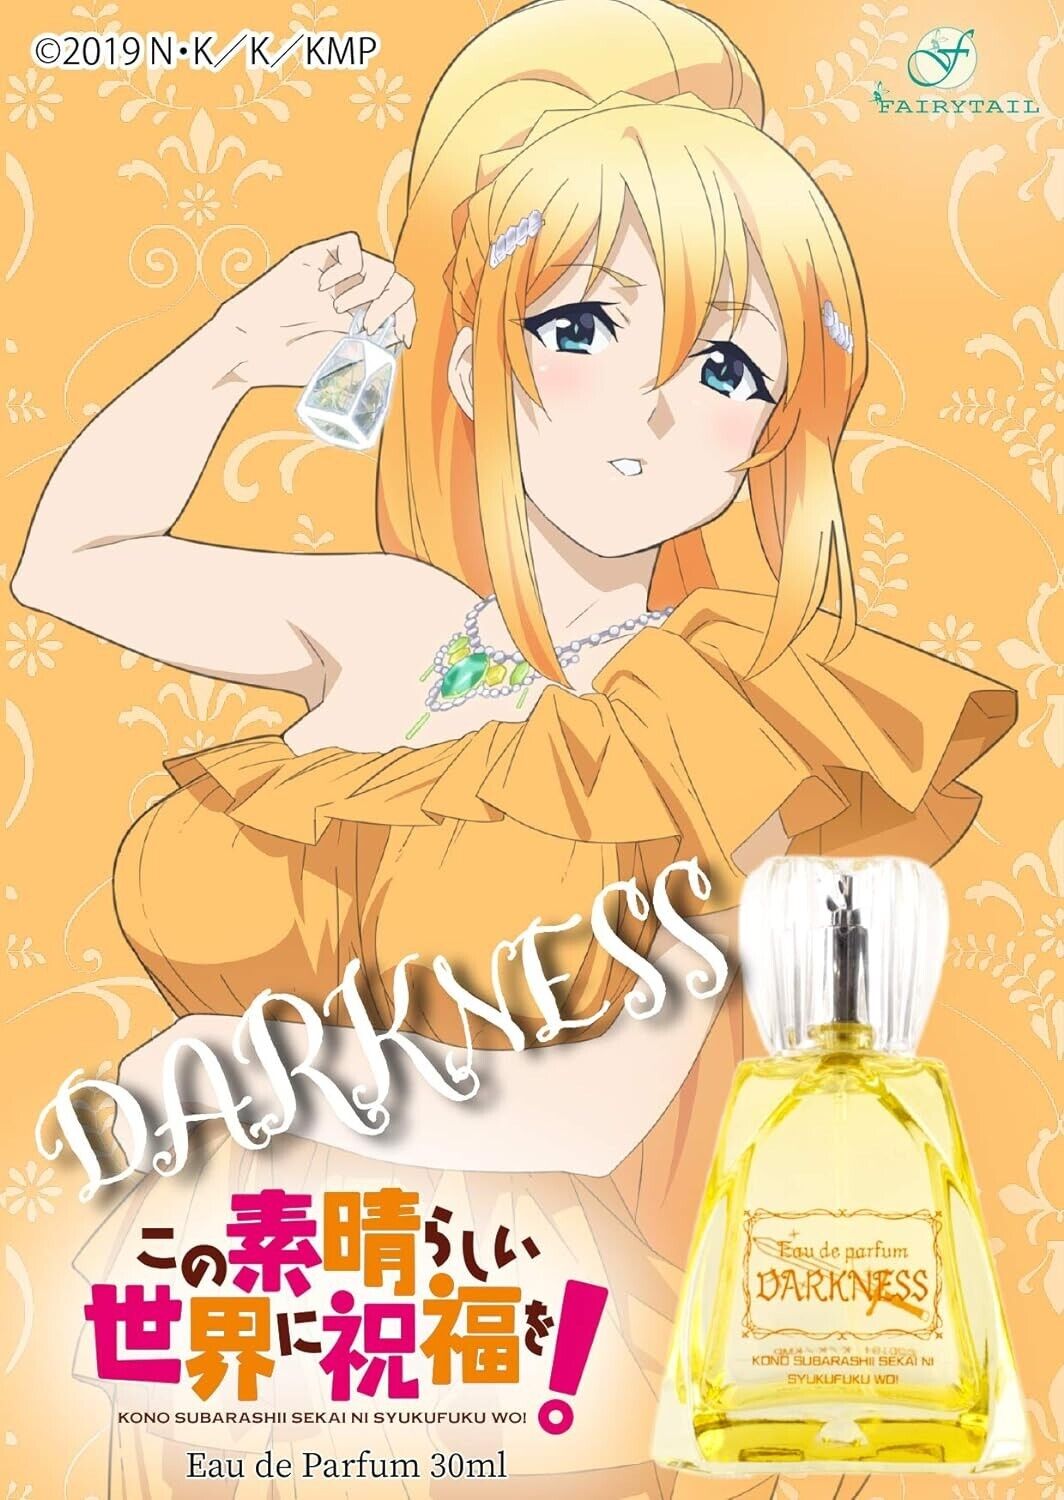 Fragrance KONOSUBA Darkness Eau de Parfum 50ml fairy tale Japan perfume F/S